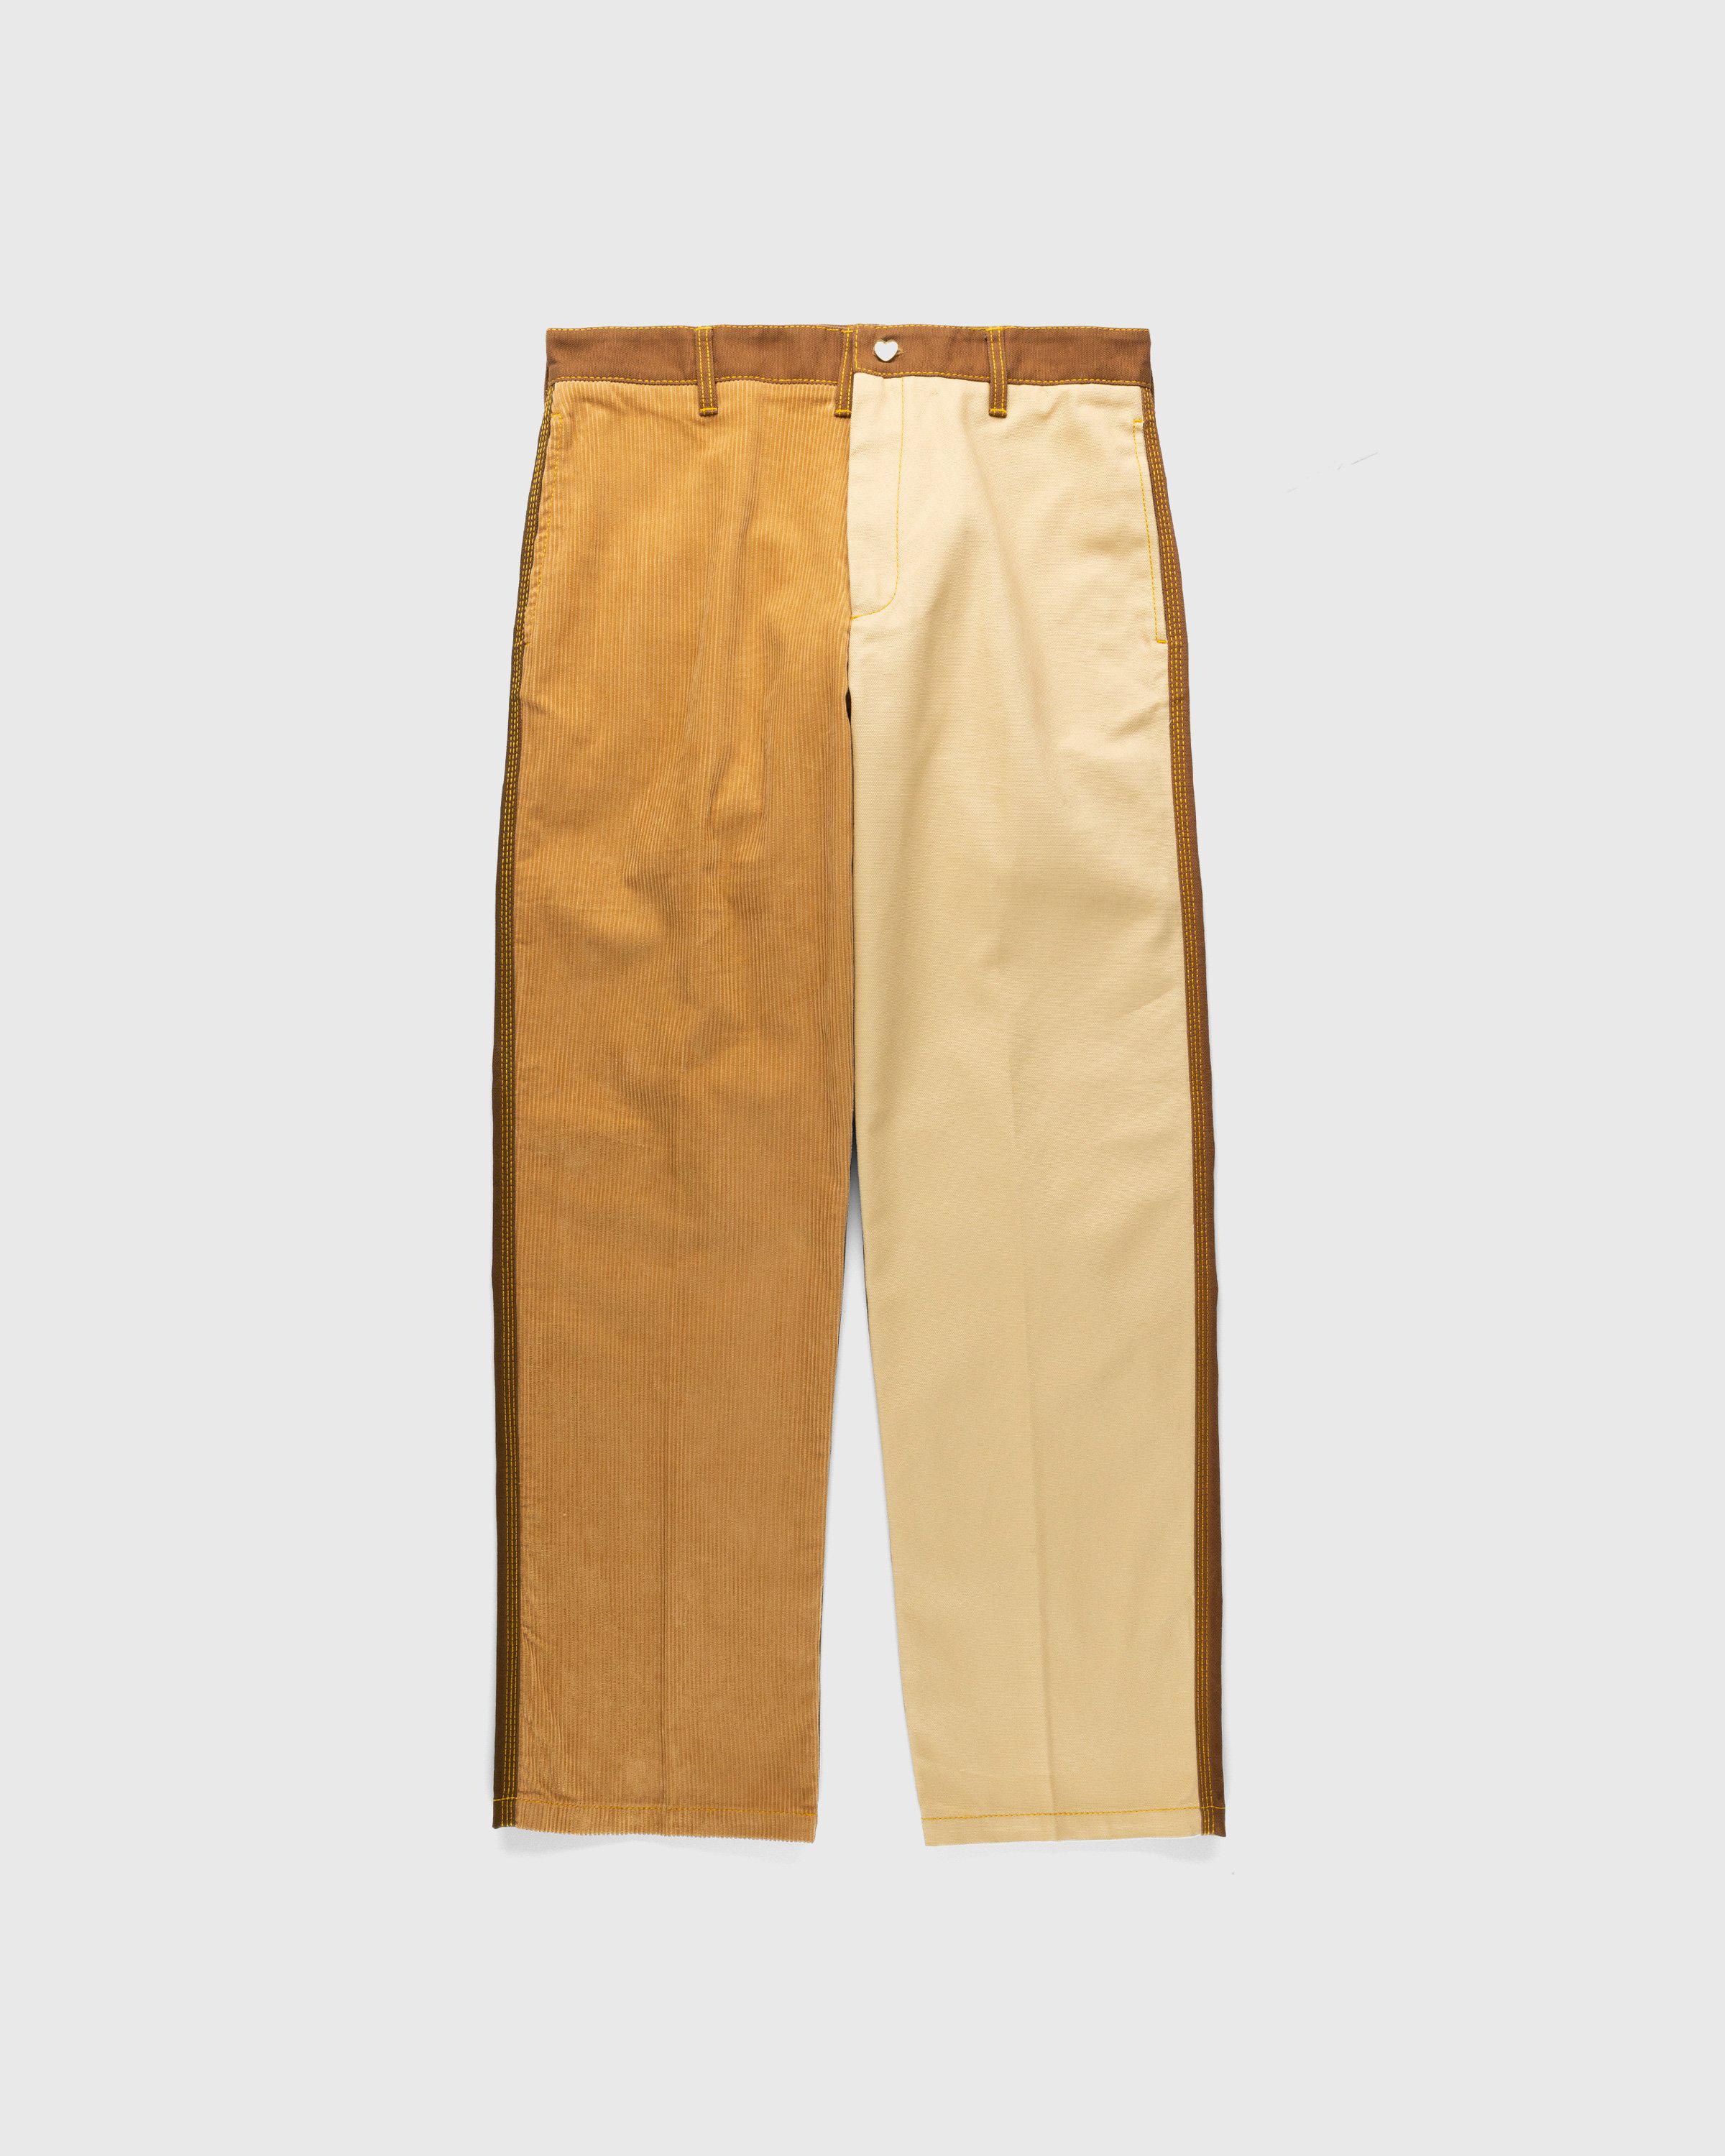 Marni x Carhartt WIP – Colorblocked Trousers Brown by MARNI X CARHARTT WIP